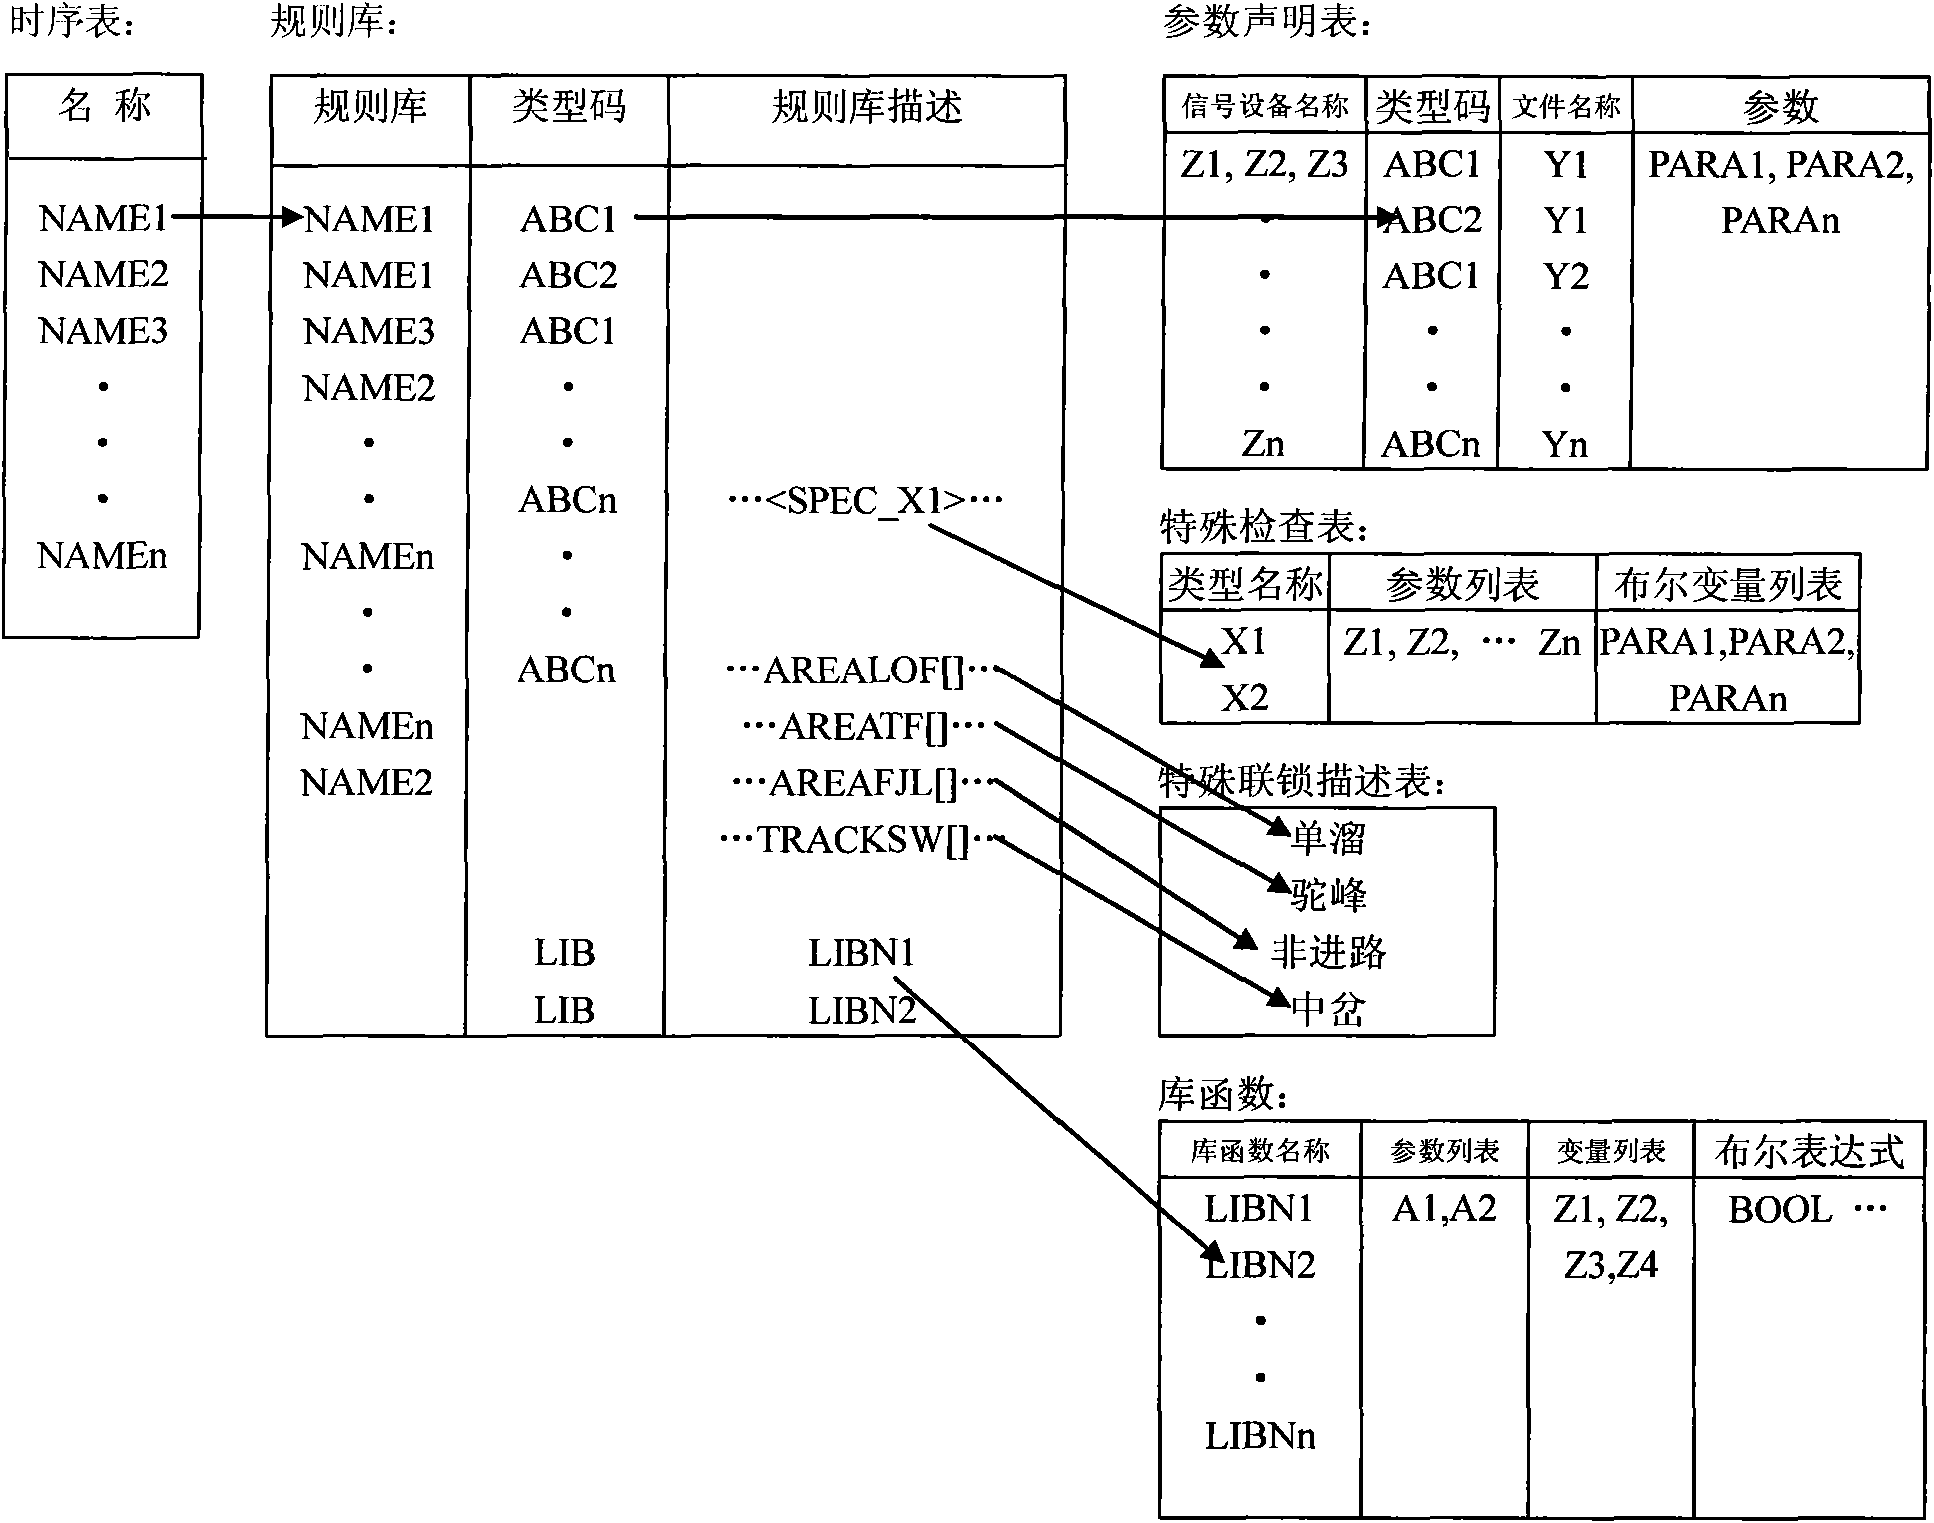 General method for generating station data